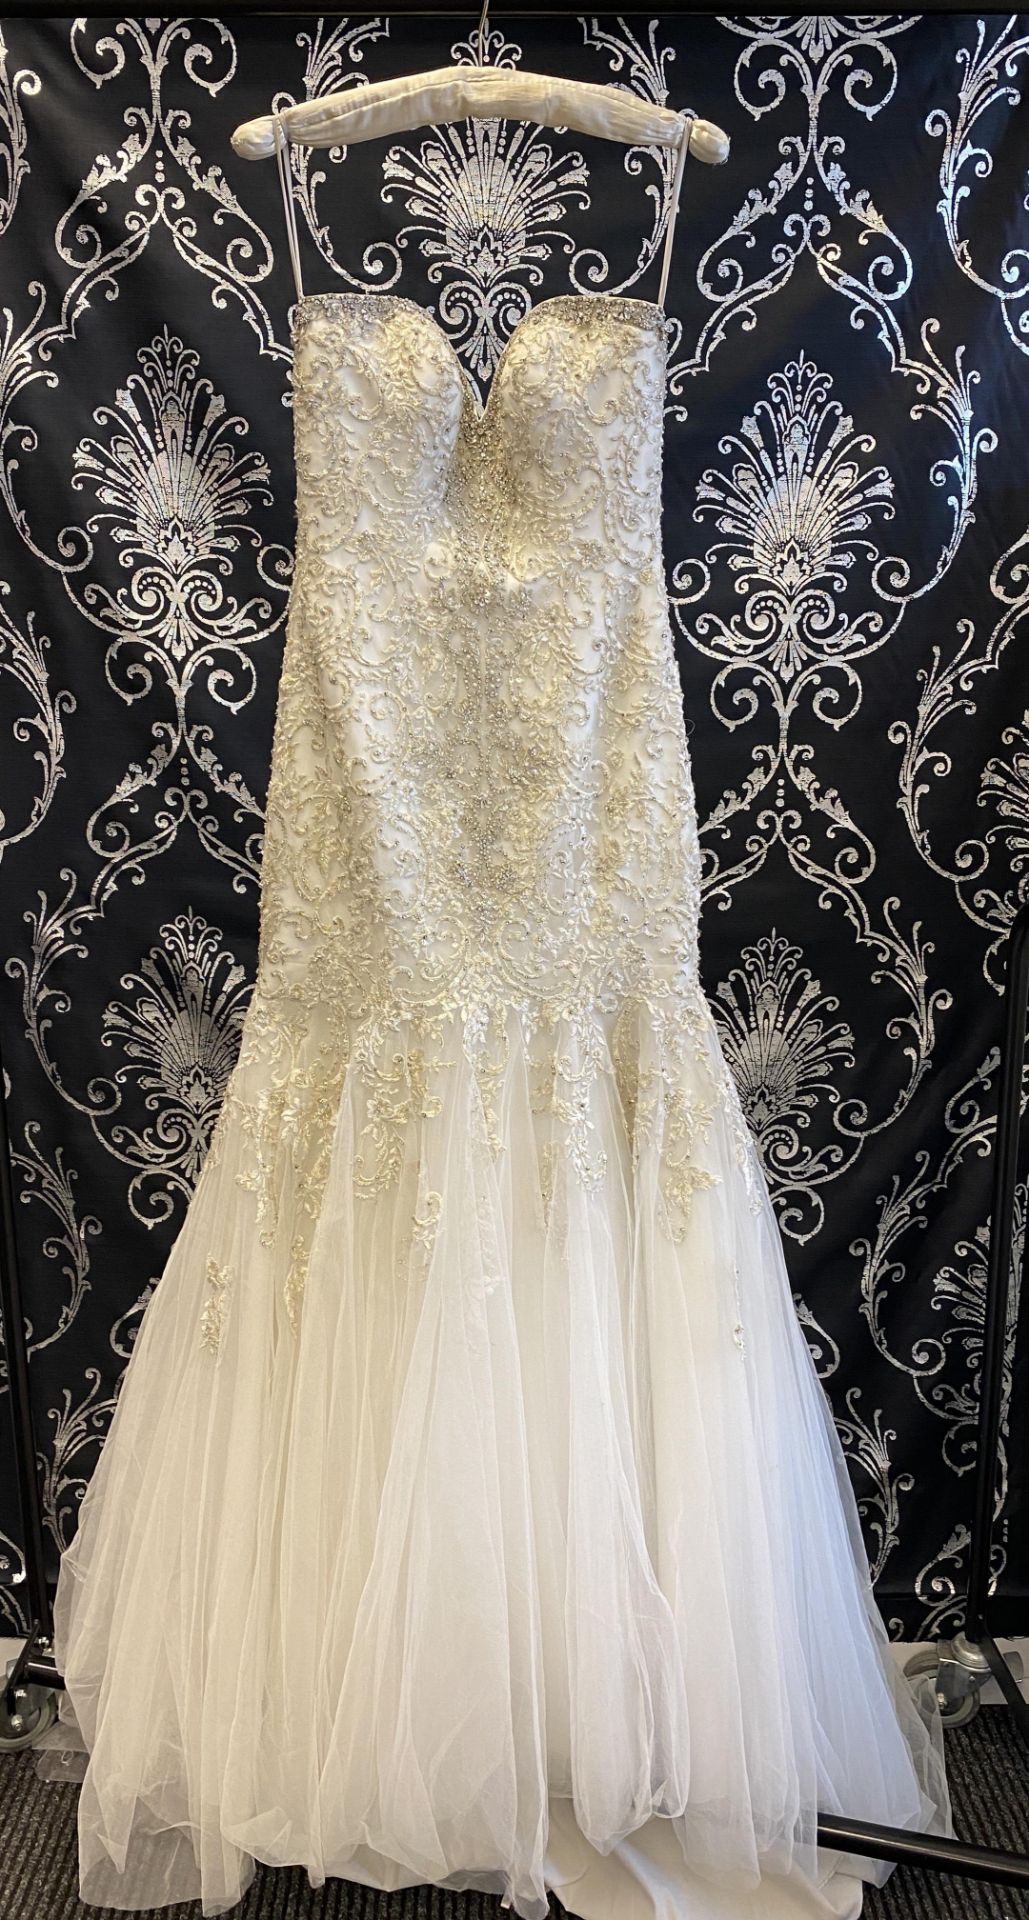 1 x ALLURE '9275' Timeless Strapless Lace And Chiffon Mermaid Designer Wedding Dress RRP £2,250 UK12 - Image 3 of 11